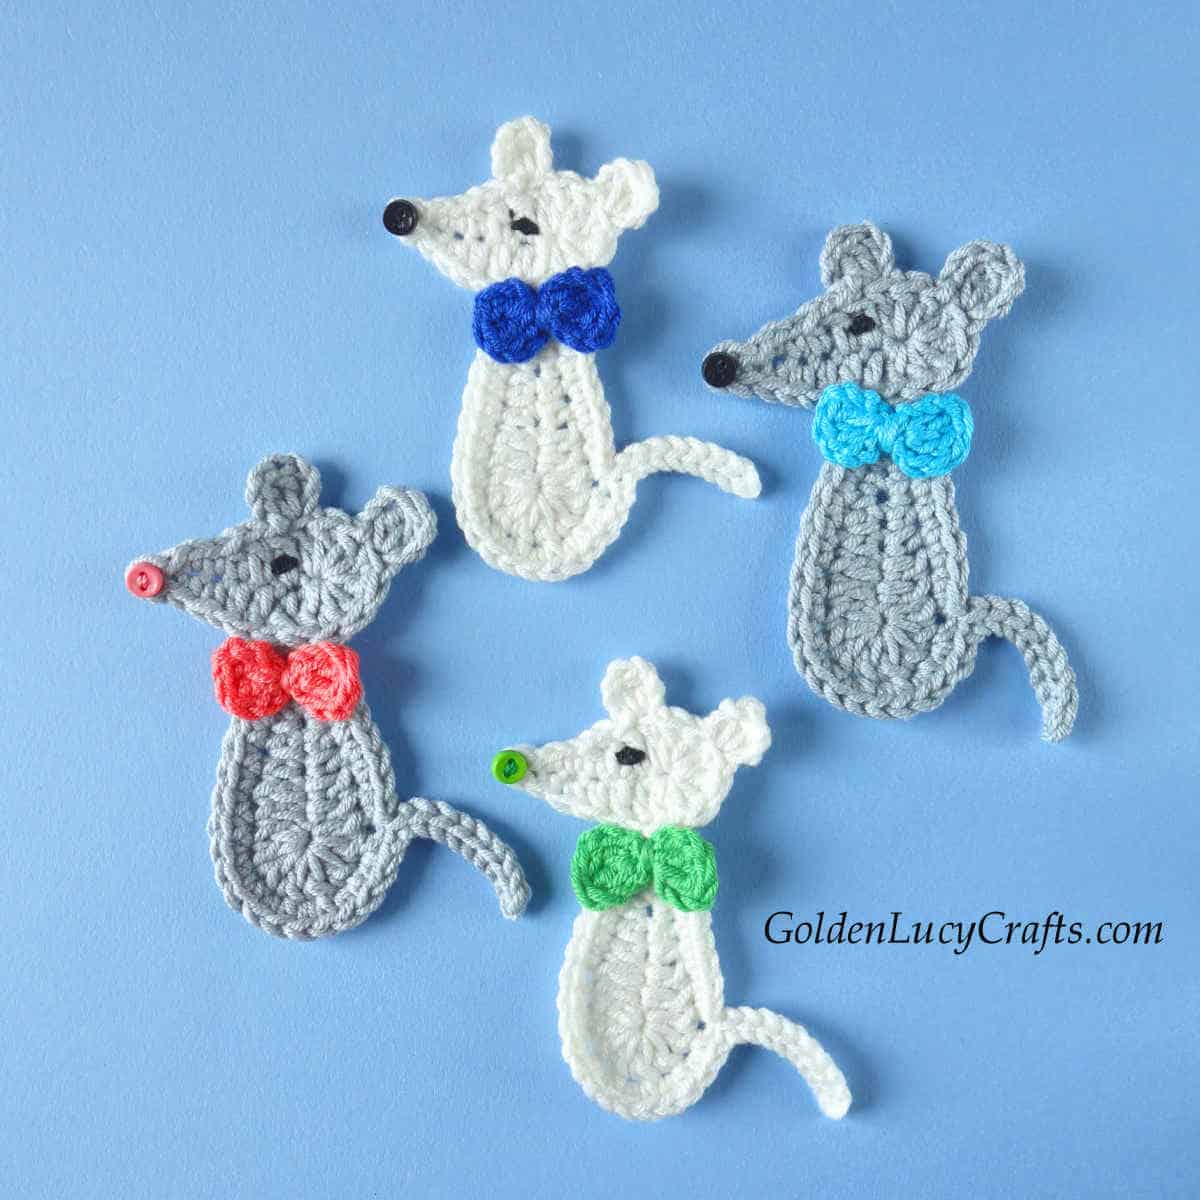 Four crocheted mouse appliques.